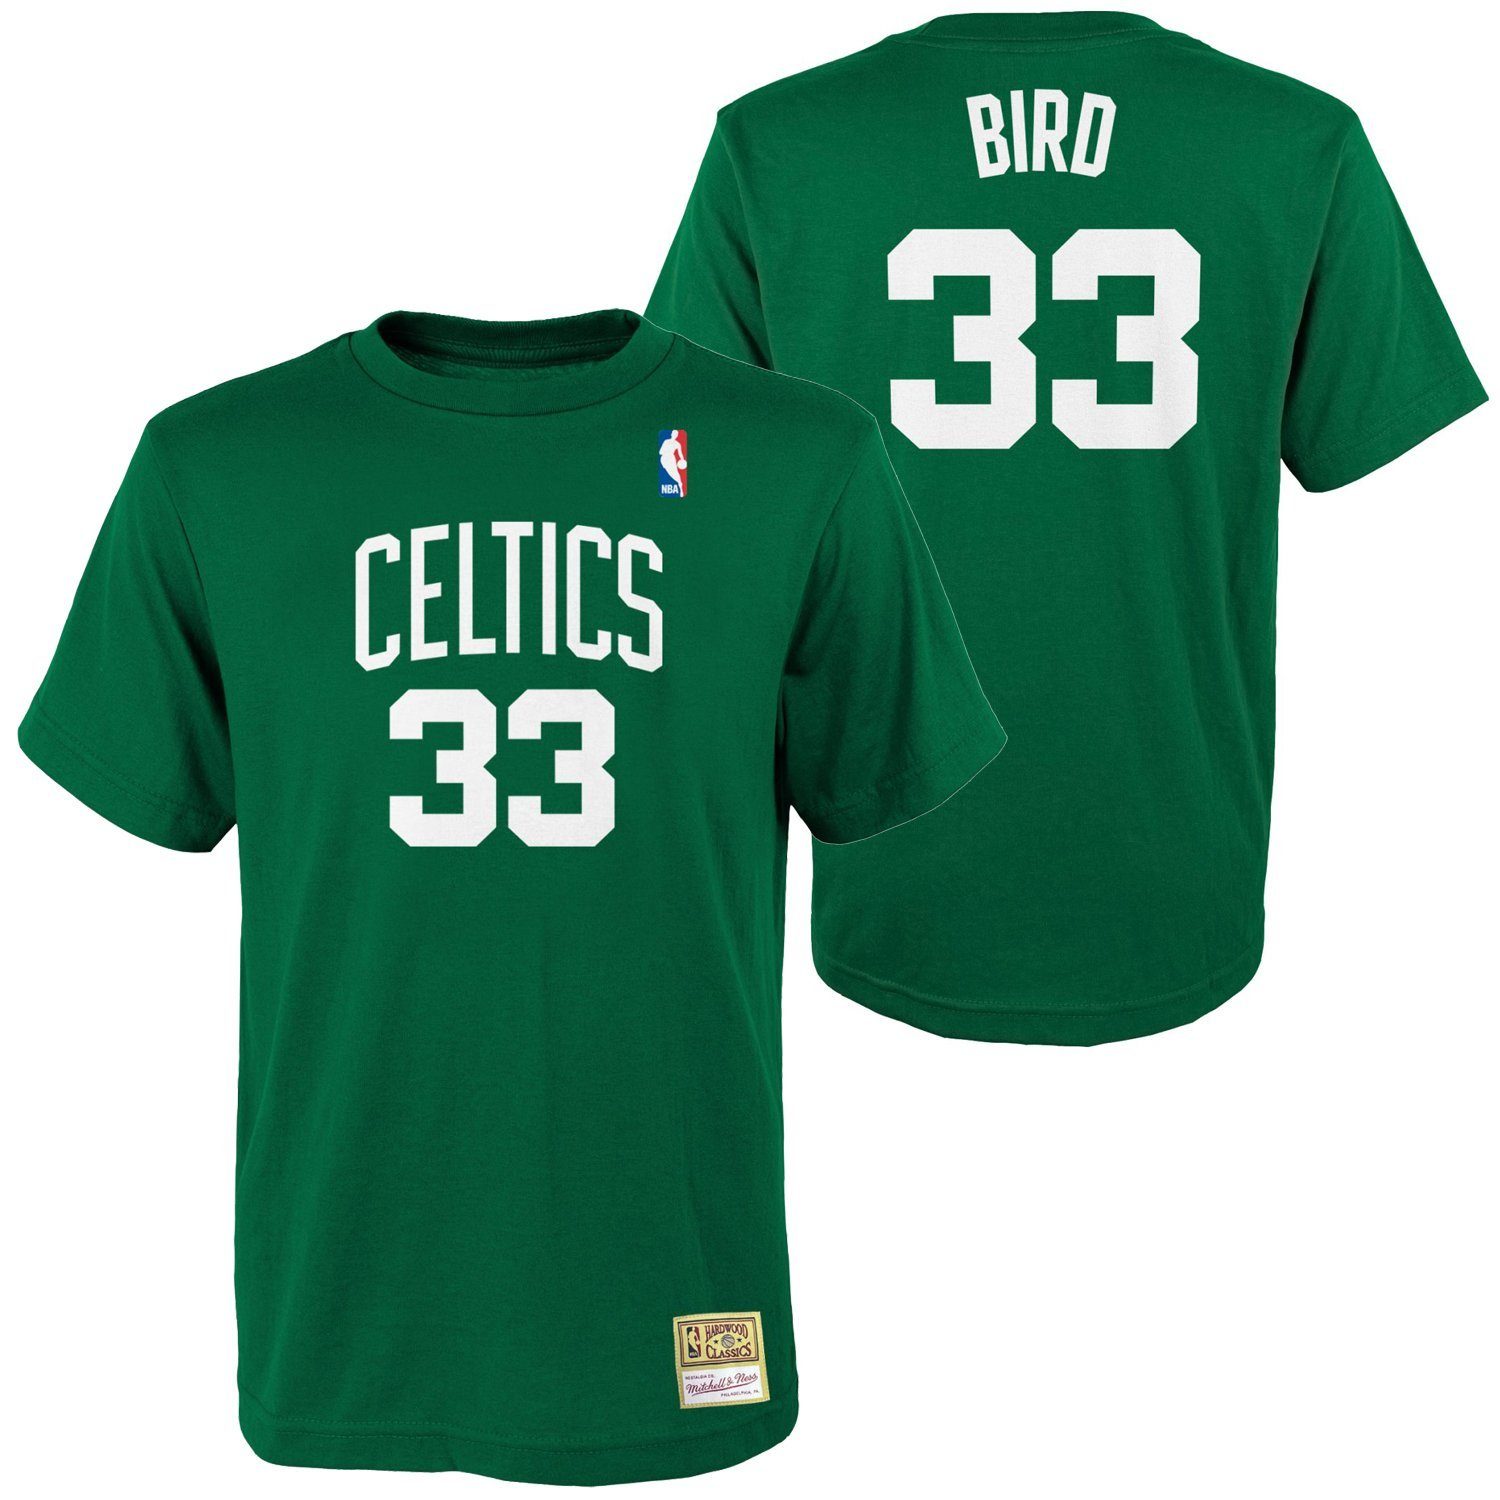 Mitchell Celtics & Boston Print-Shirt Ness Bird Larry